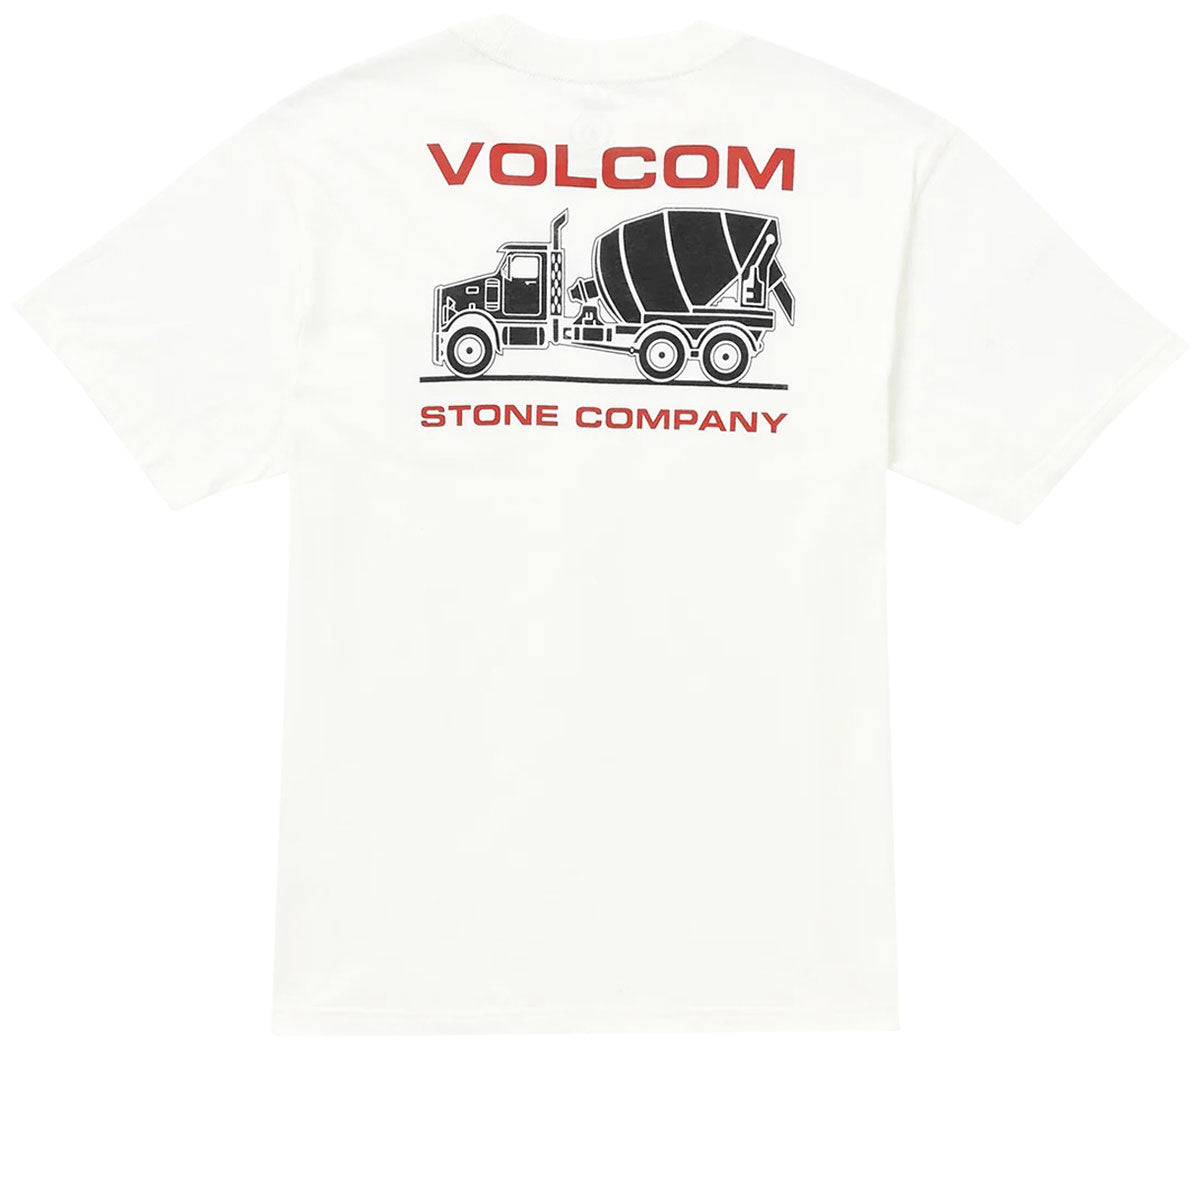 Volcom Skate Vitals Grant Taylor 1 T-Shirt - Off White image 2